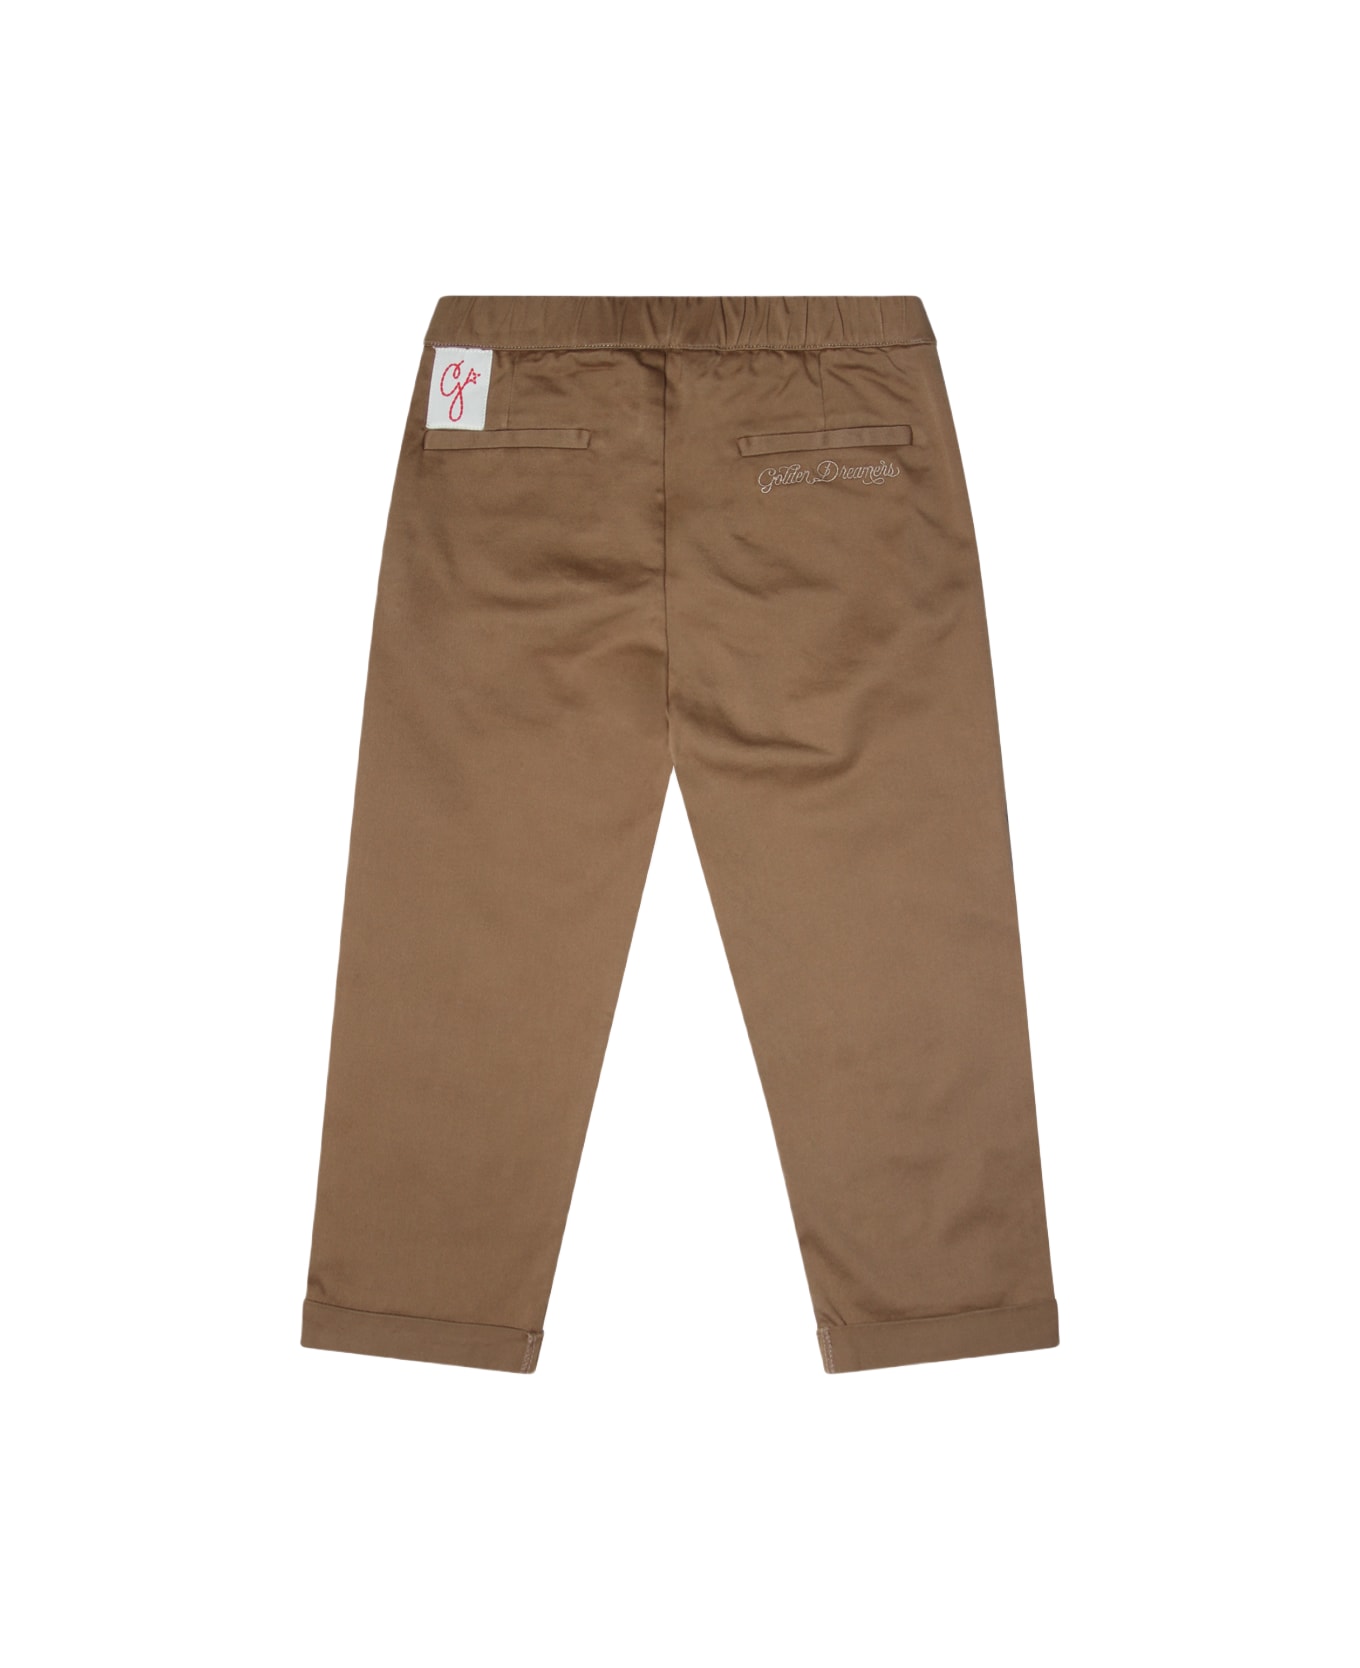 Golden Goose Caramel Cotton Stretch Pants - Brown